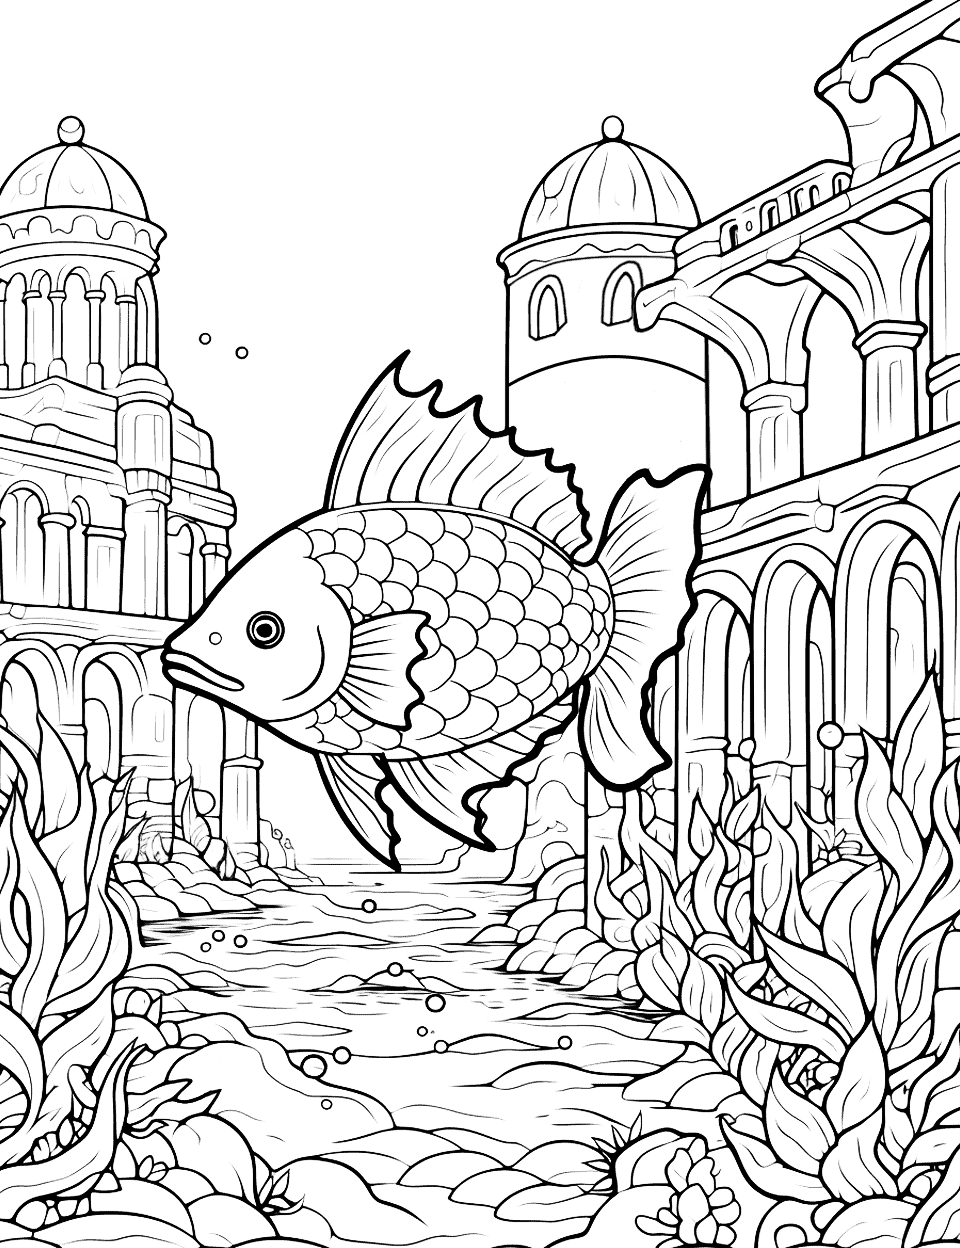 Lost City of Atlantis Fish Coloring Page - Legendary fish and ruin from the lost city of Atlantis.